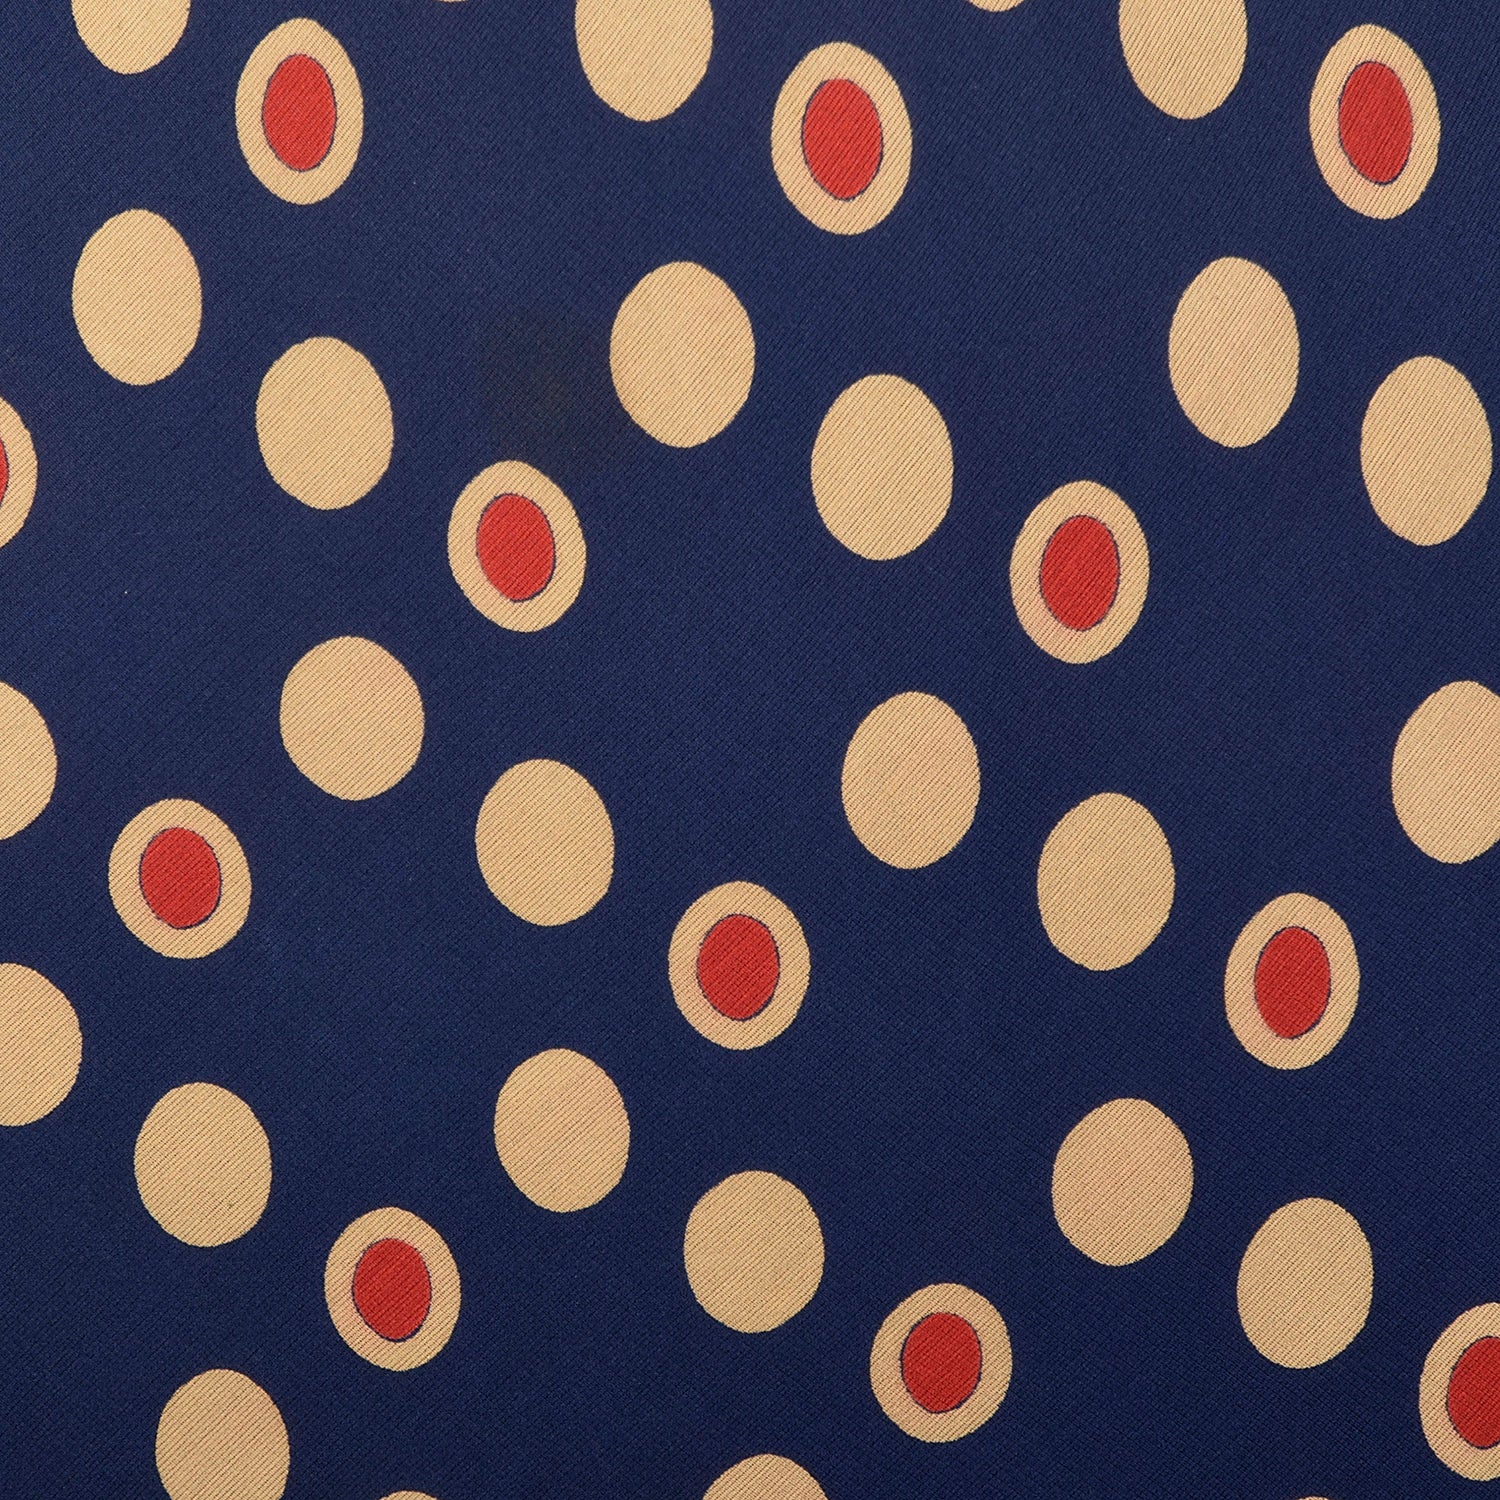 XXS 1930s Navy Blue Bias Cut Dress Sleeveless Polka Dot Print